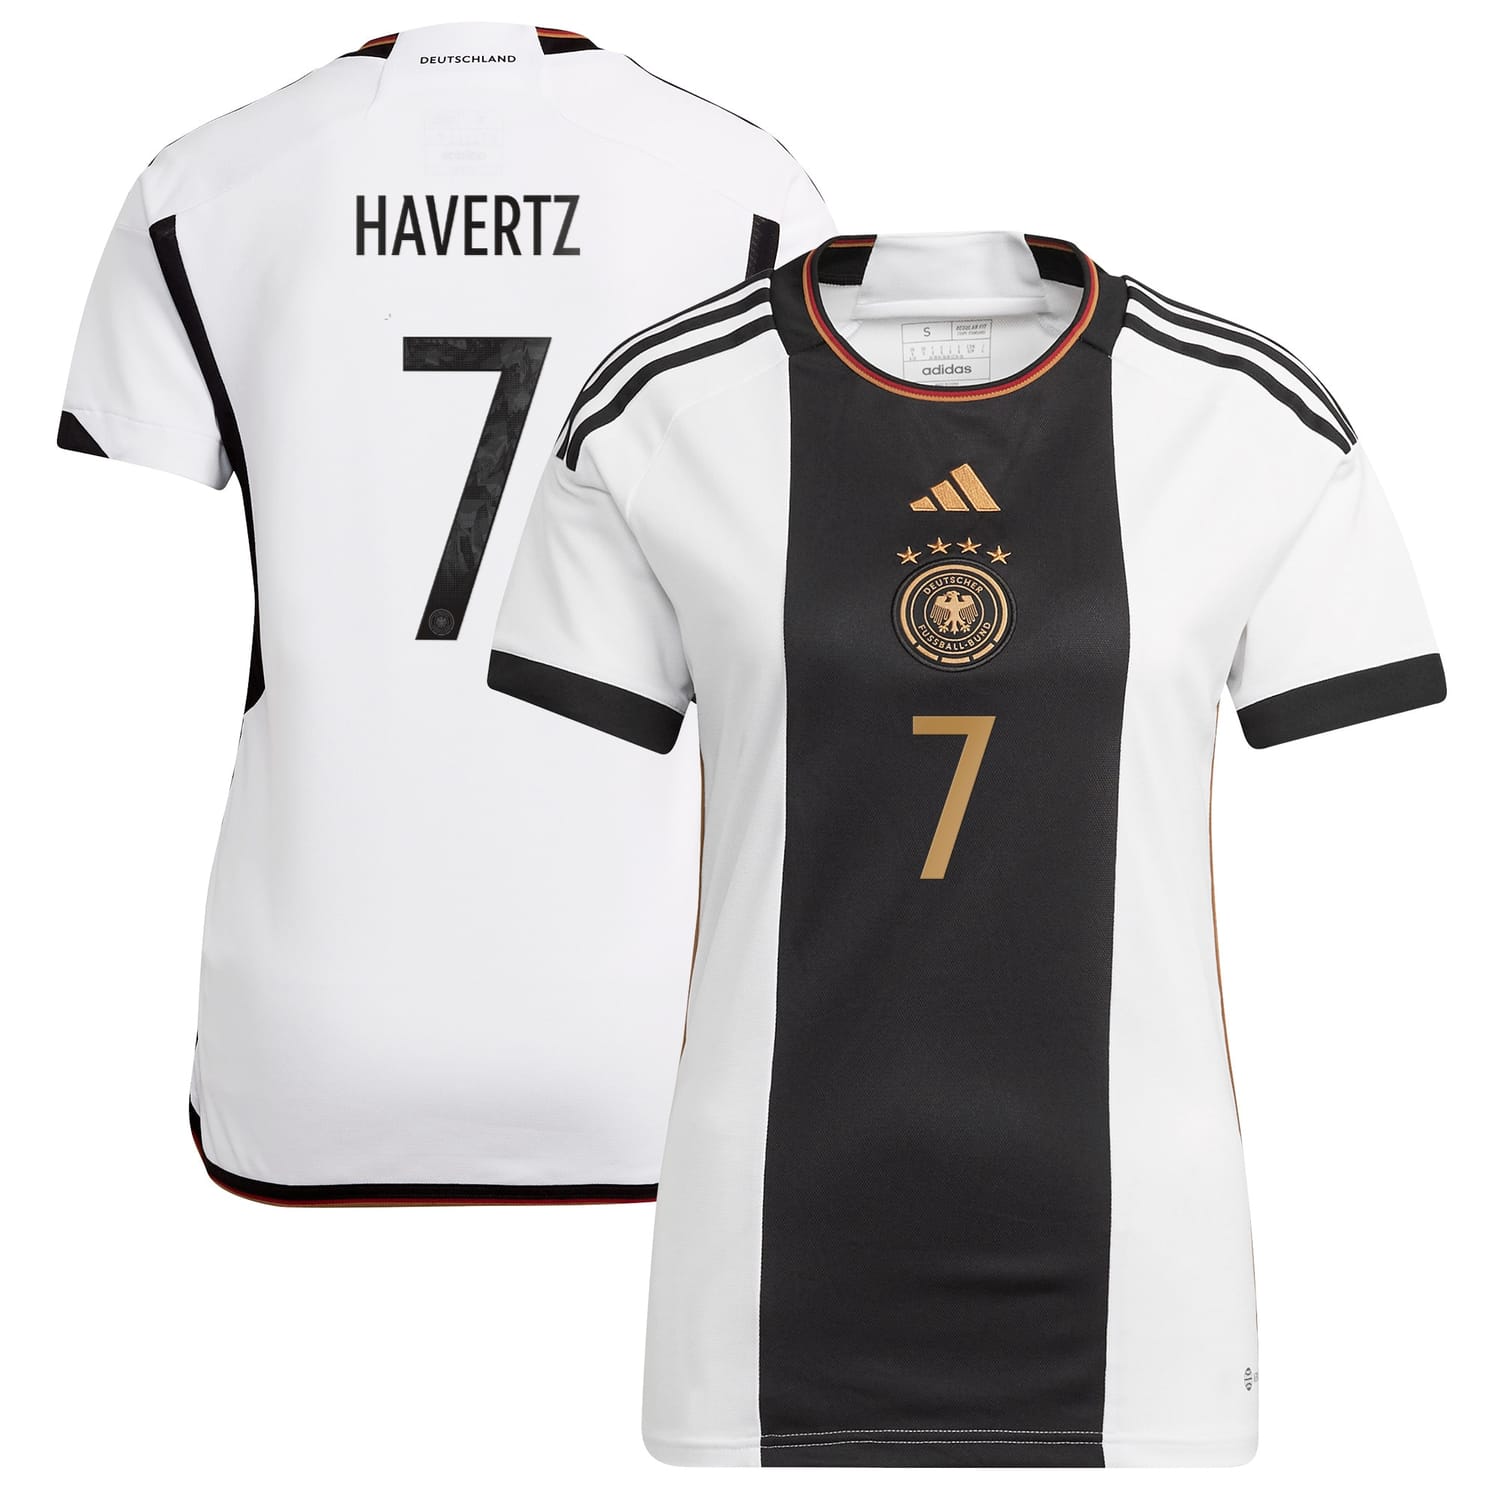 Germany National Team Home Jersey Shirt player Kai Havertz 7 printing for Women